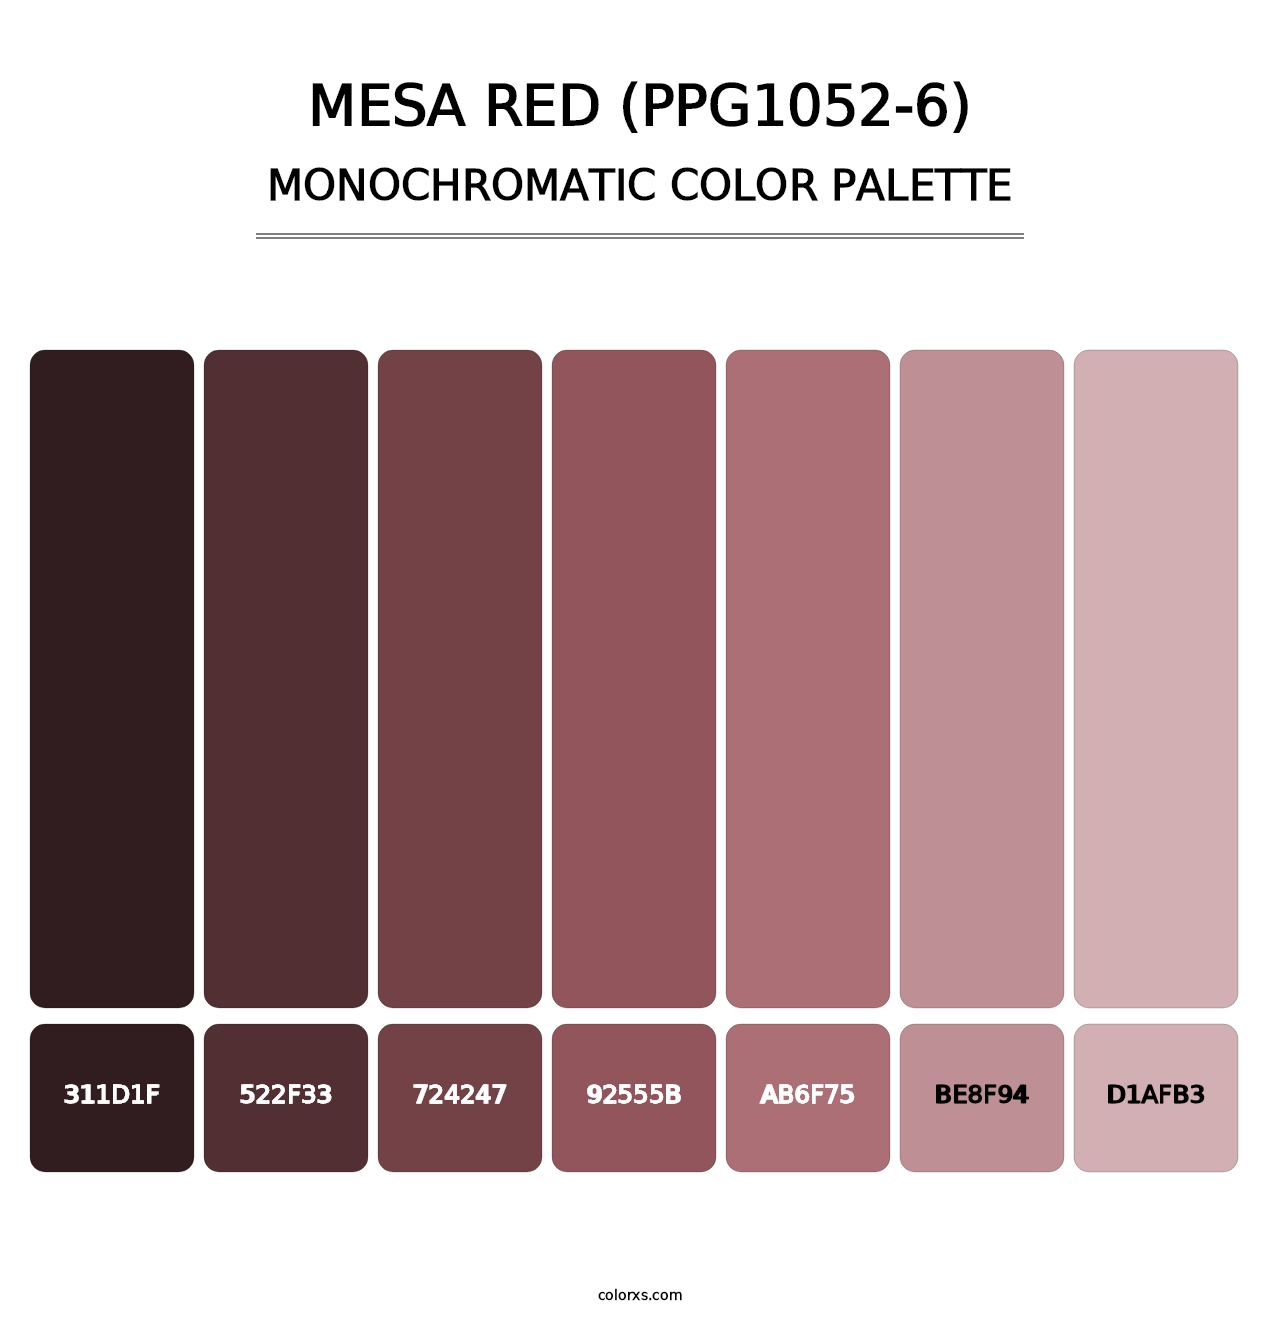 Mesa Red (PPG1052-6) - Monochromatic Color Palette